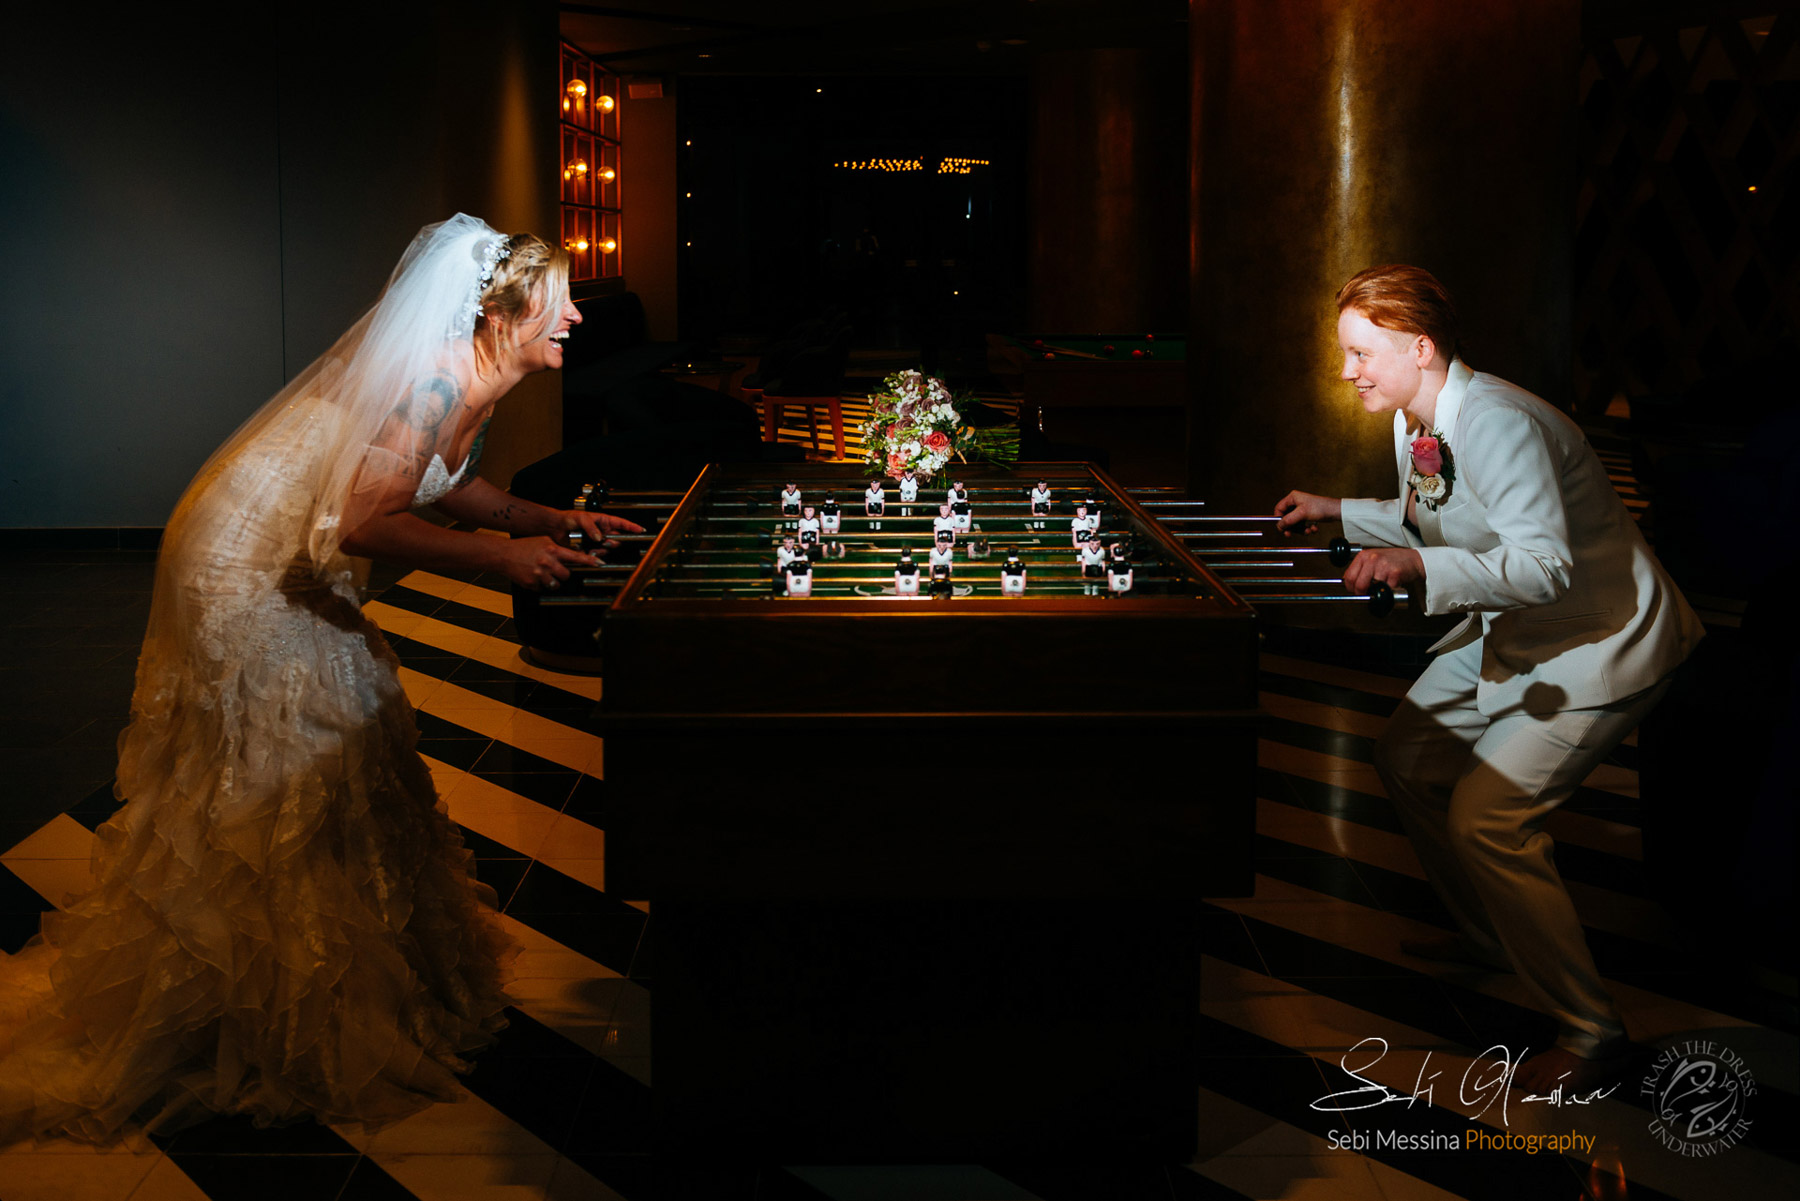 Lgtb wedding in Mexico - Sebi Messina Photography